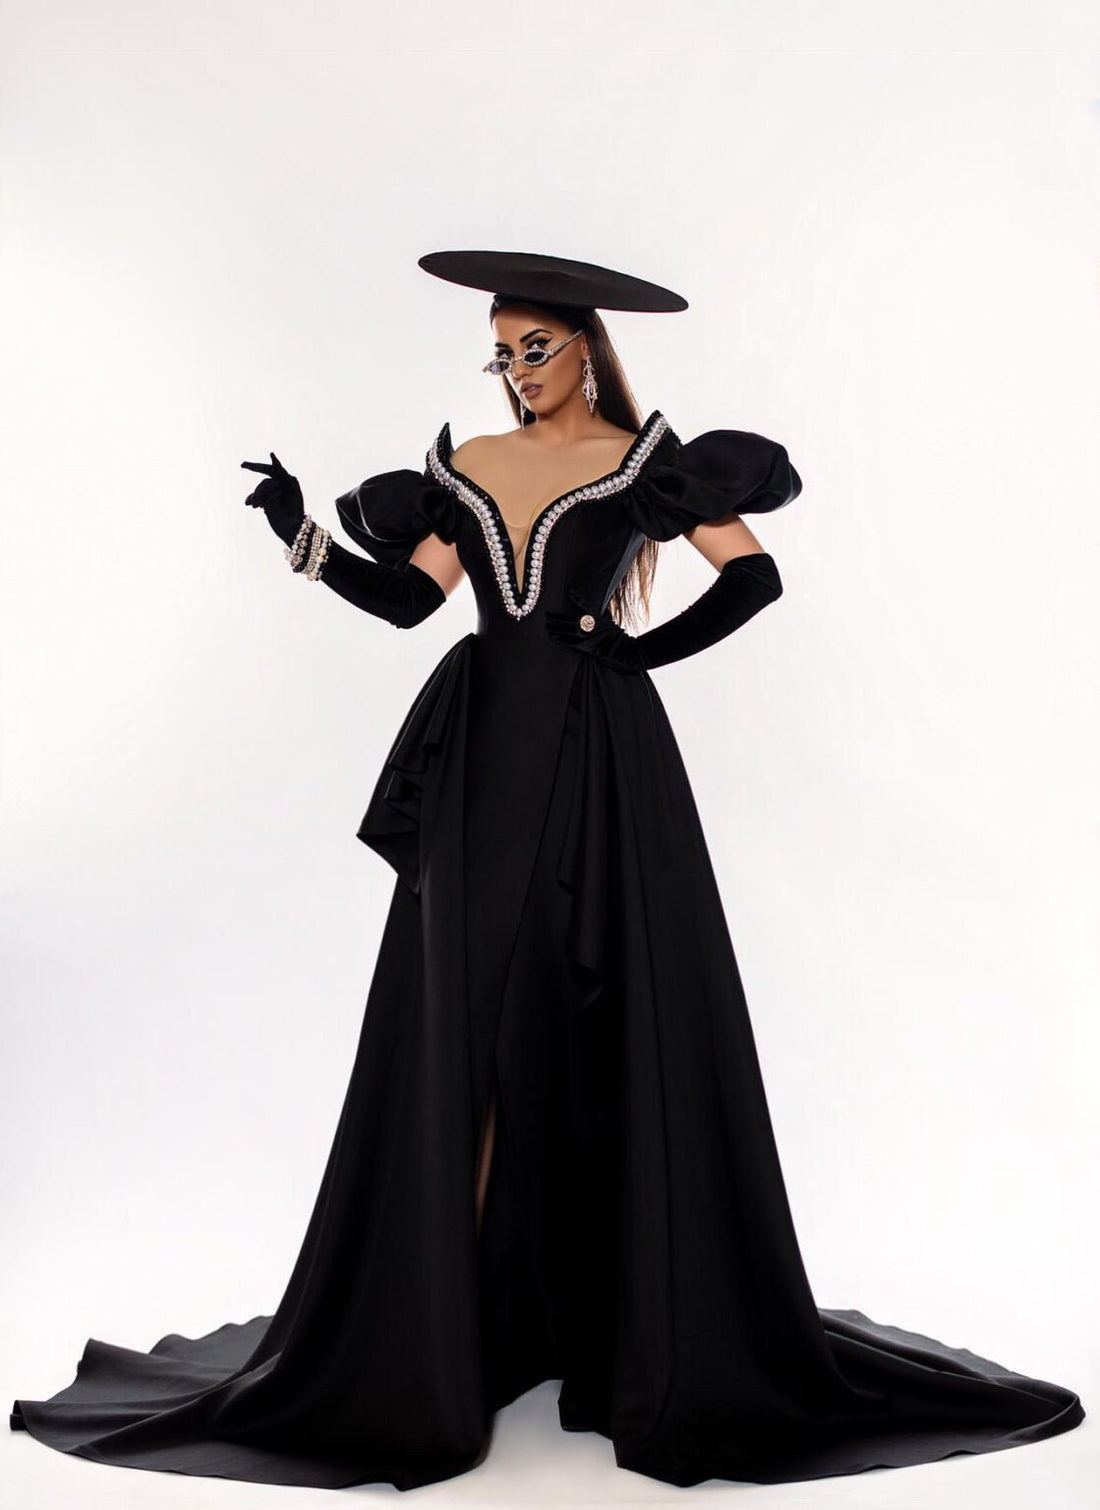 Dramatic Black Gown with Statement Sleeves and Hat - KUJTA & MERI - KUJTA & MERI